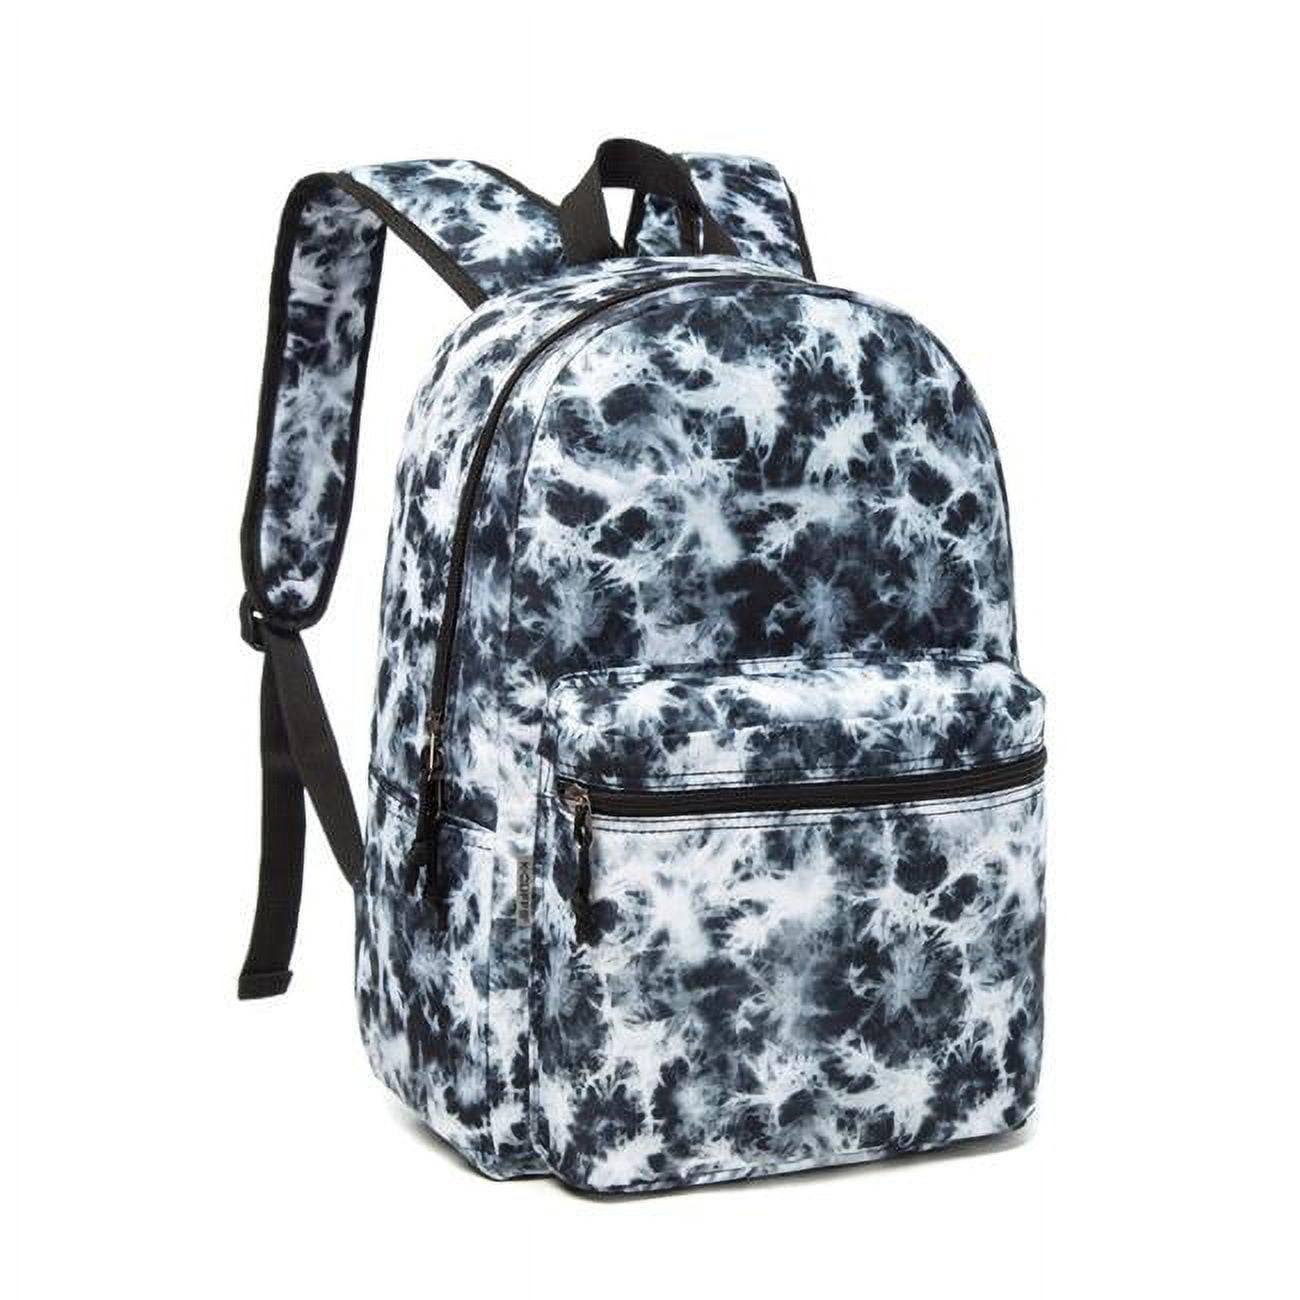 Picture of DDI 2352993 Tie-Dye Backpack Laptop Bookbag Case of 25